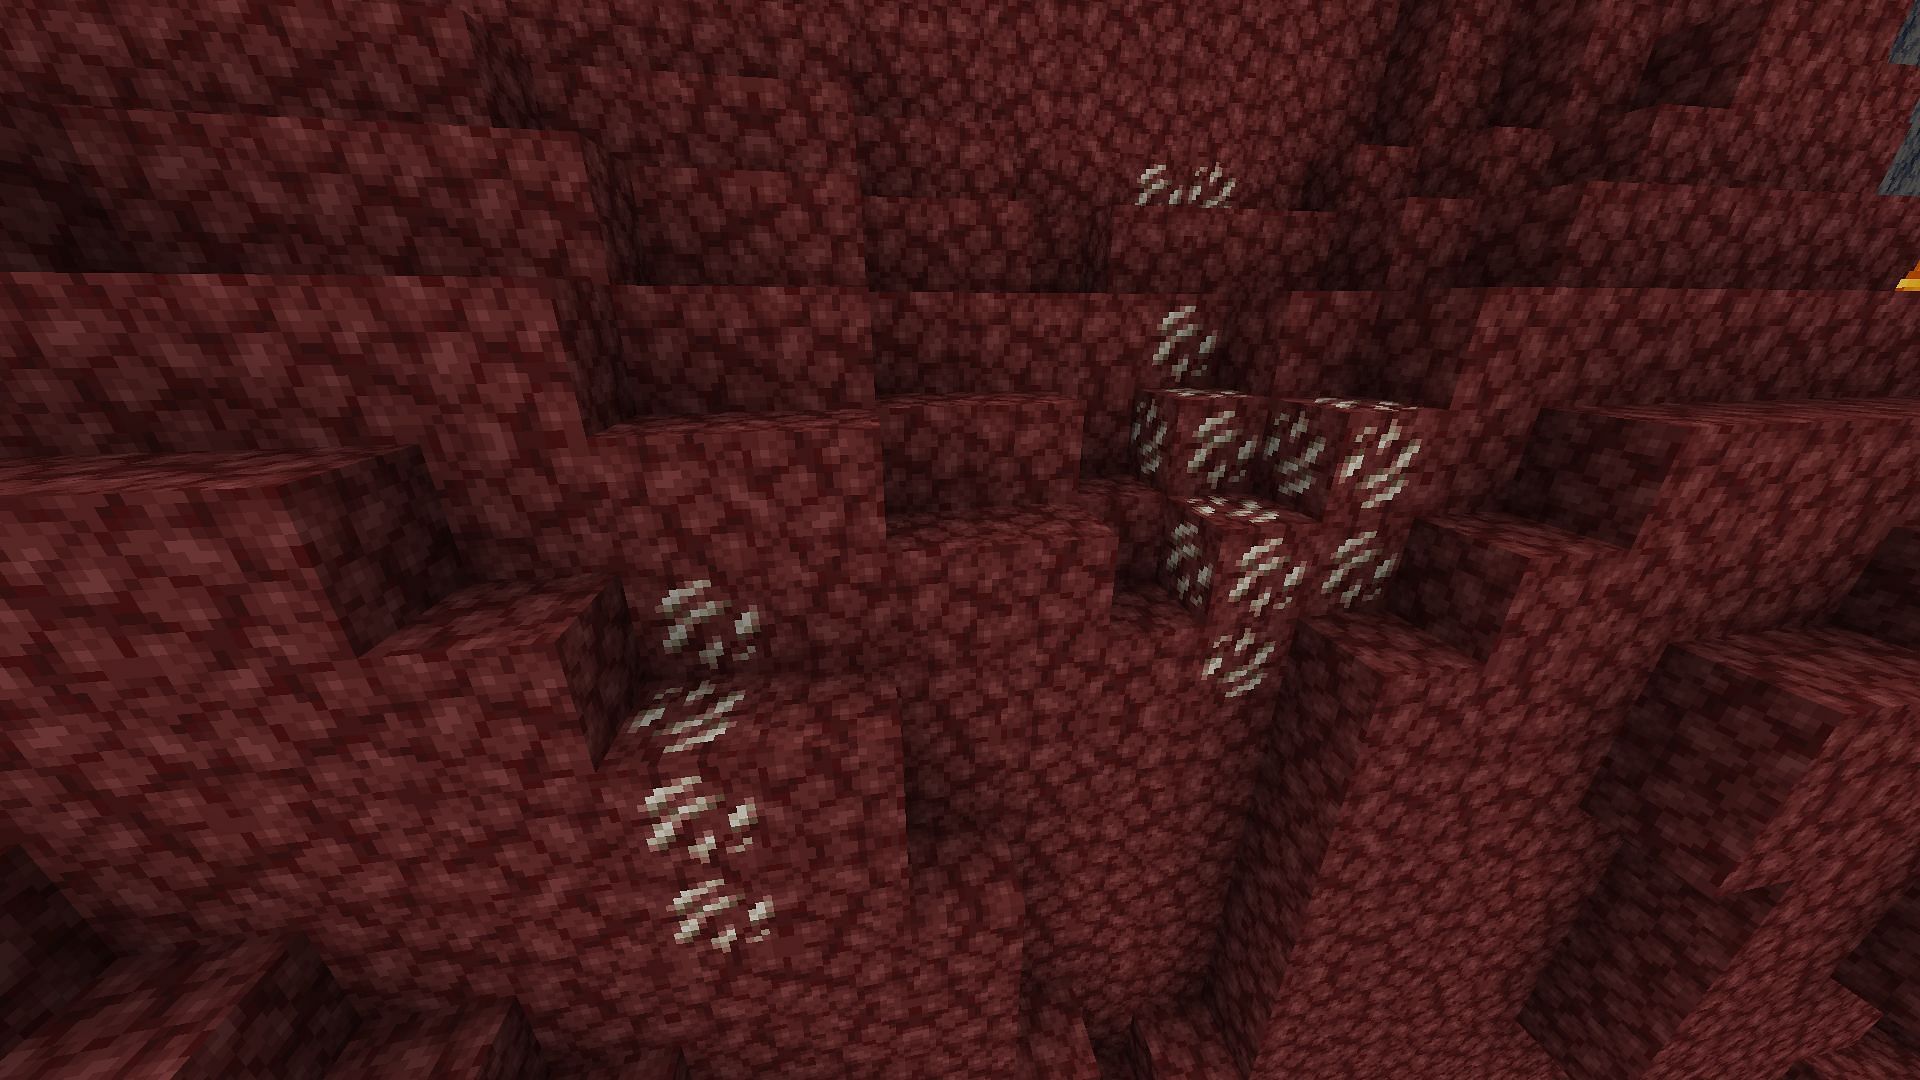 Nether Quartz ore blocks are quite common in Minecraft (Image via Mojang)